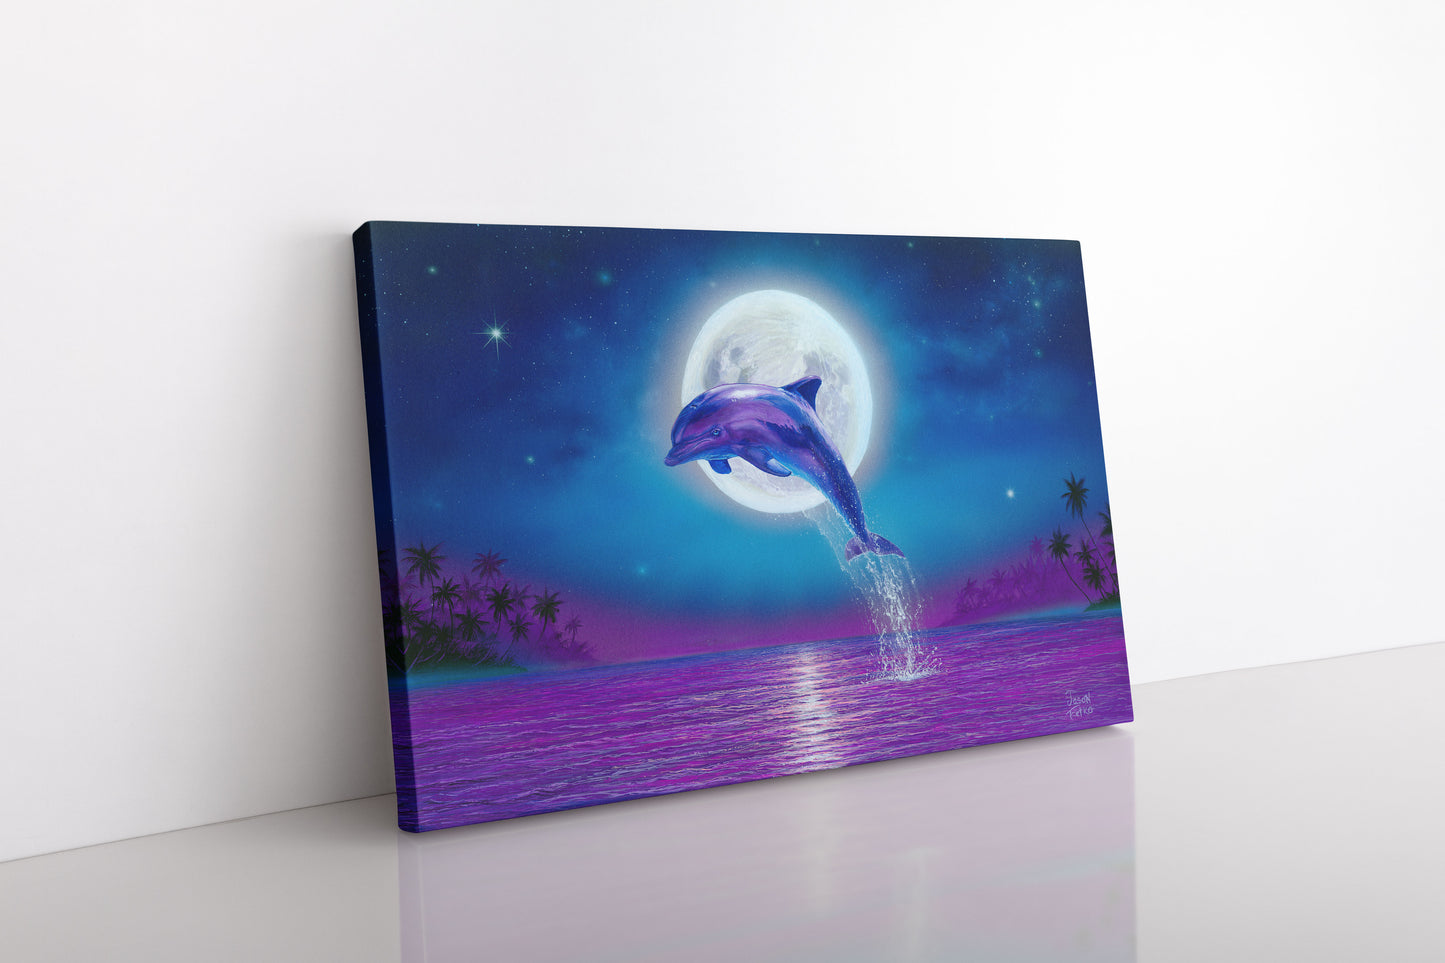 Dolphin Painting Wall Art Print- "Dolphin Moonlight" by Jason Fetko